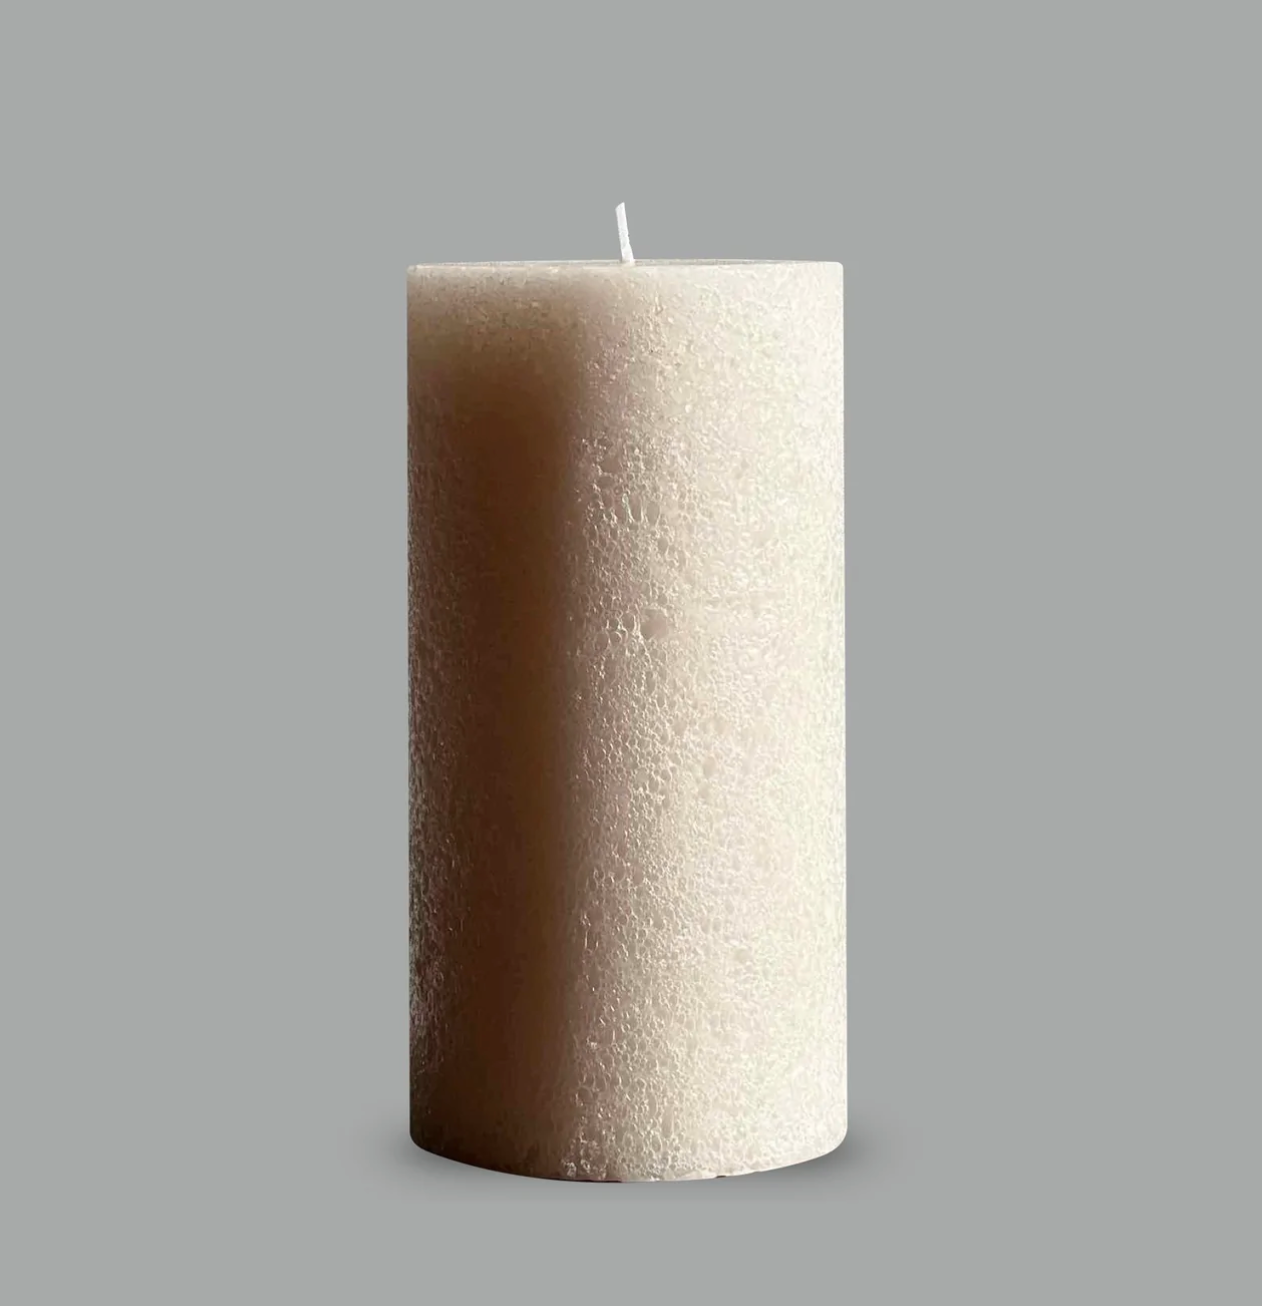 Candle Kiosk Texturted Pillars